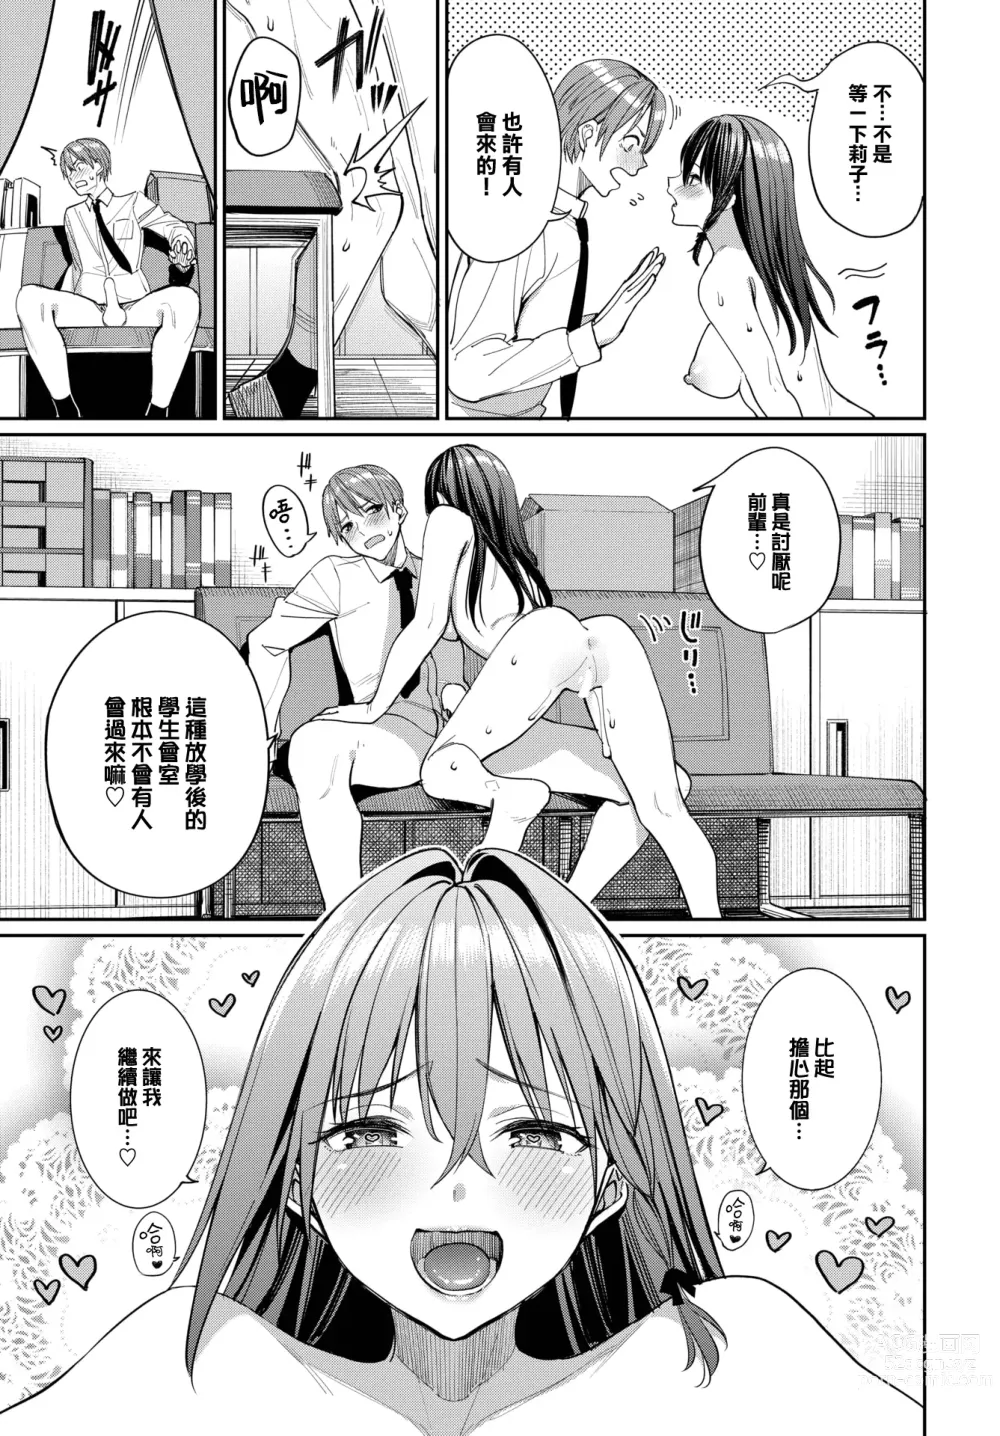 Page 17 of manga Riko no Hatsujou Chuuihou! - Im in heat so much. I can't take it...